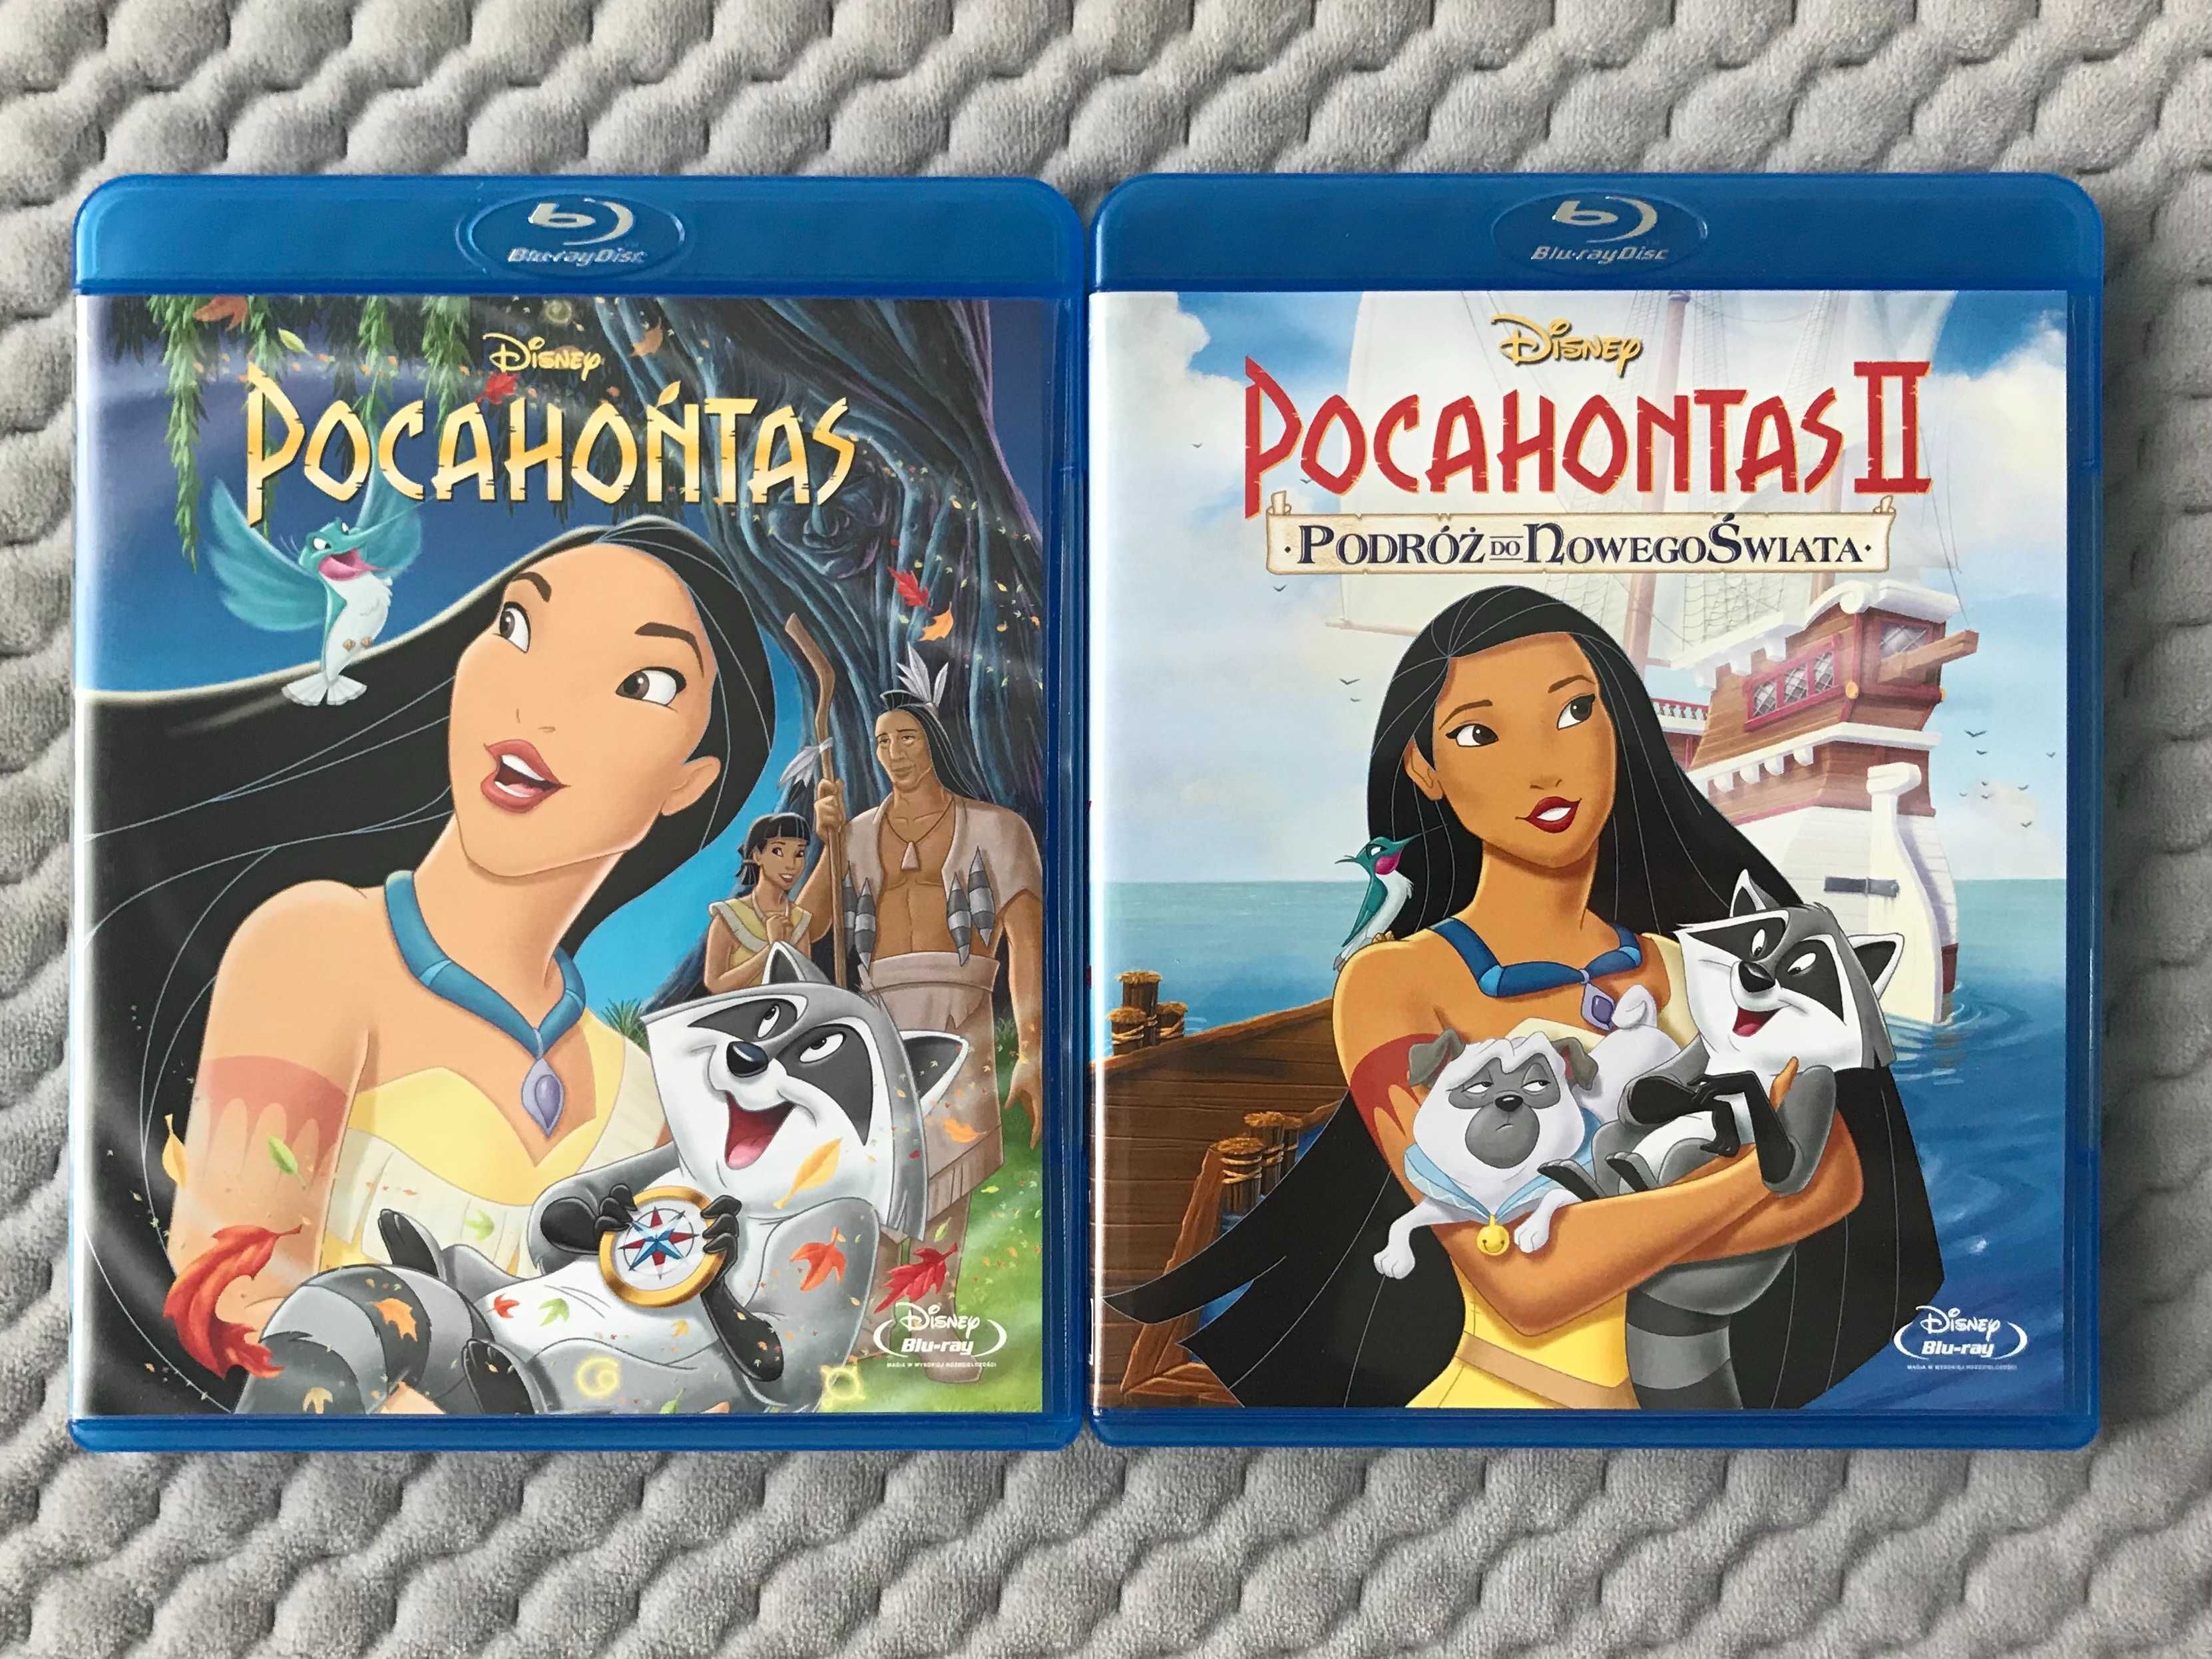 "Pocahontas" + "Pocahontas II: Podróż Do Nowego Świata" - 2 Blu-ray